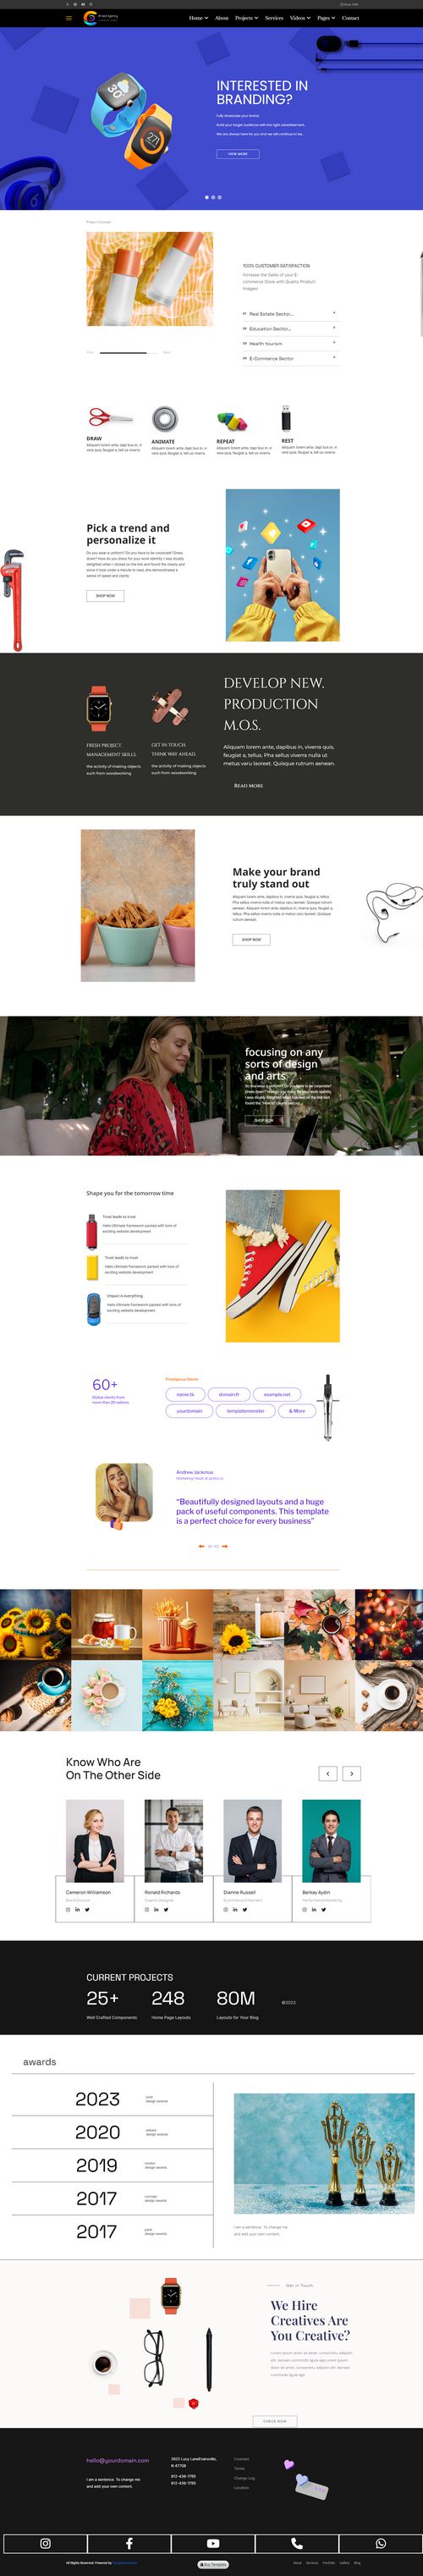 Colibric - Brand Portfolio and Marketing Creative Agency Joomla Template